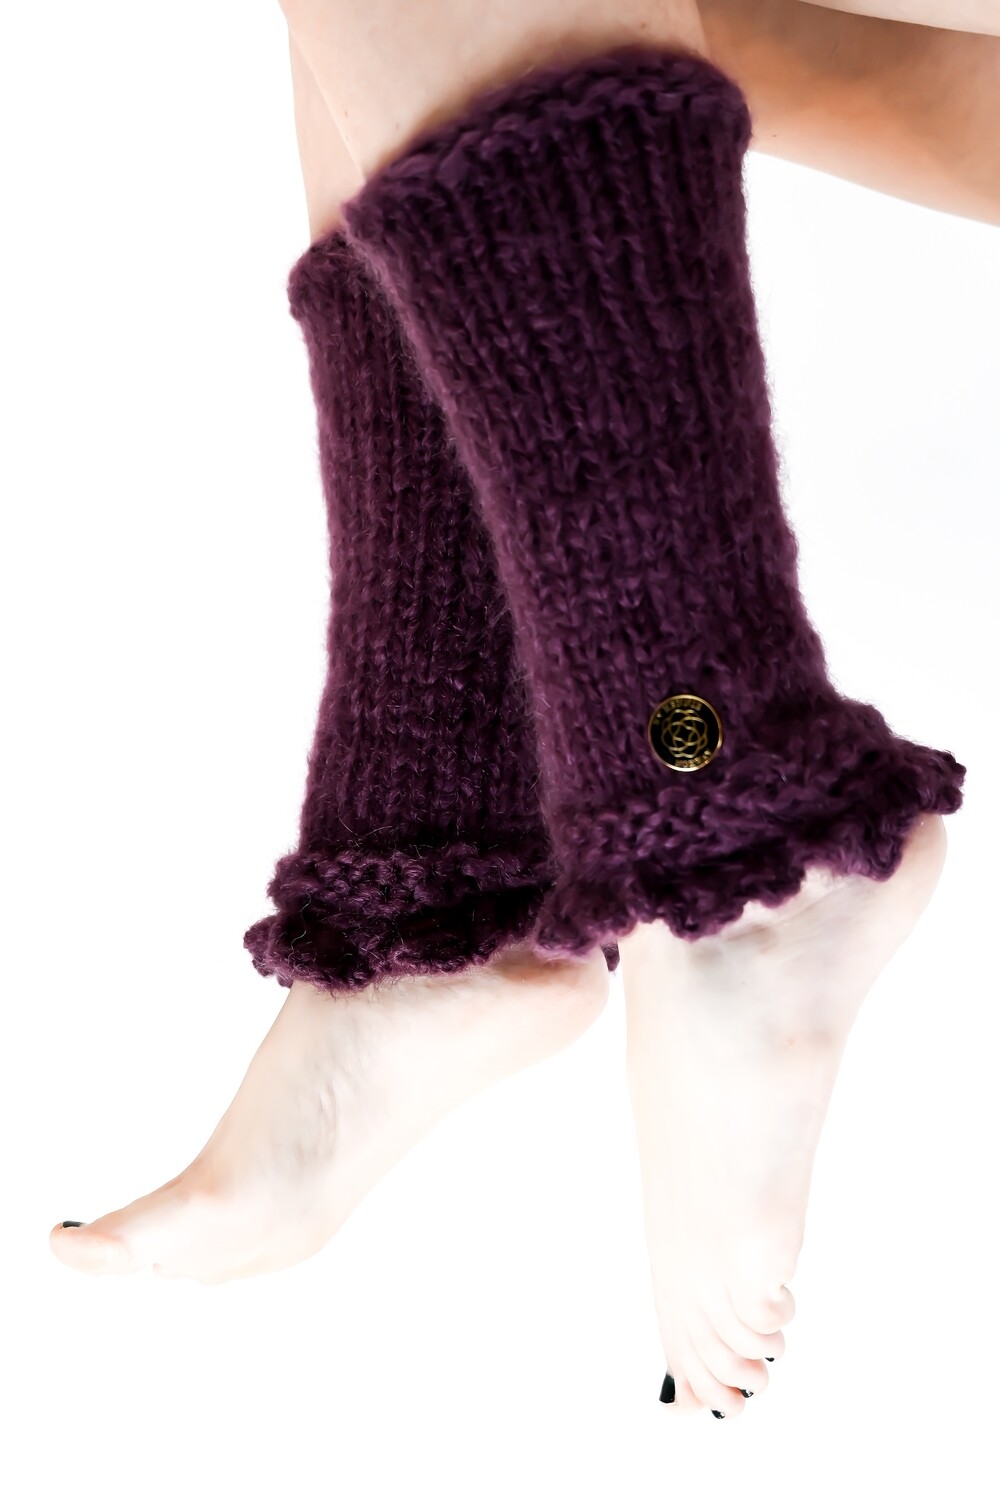 INGRID legg varmere / leg warmers burgundy exclusive collection